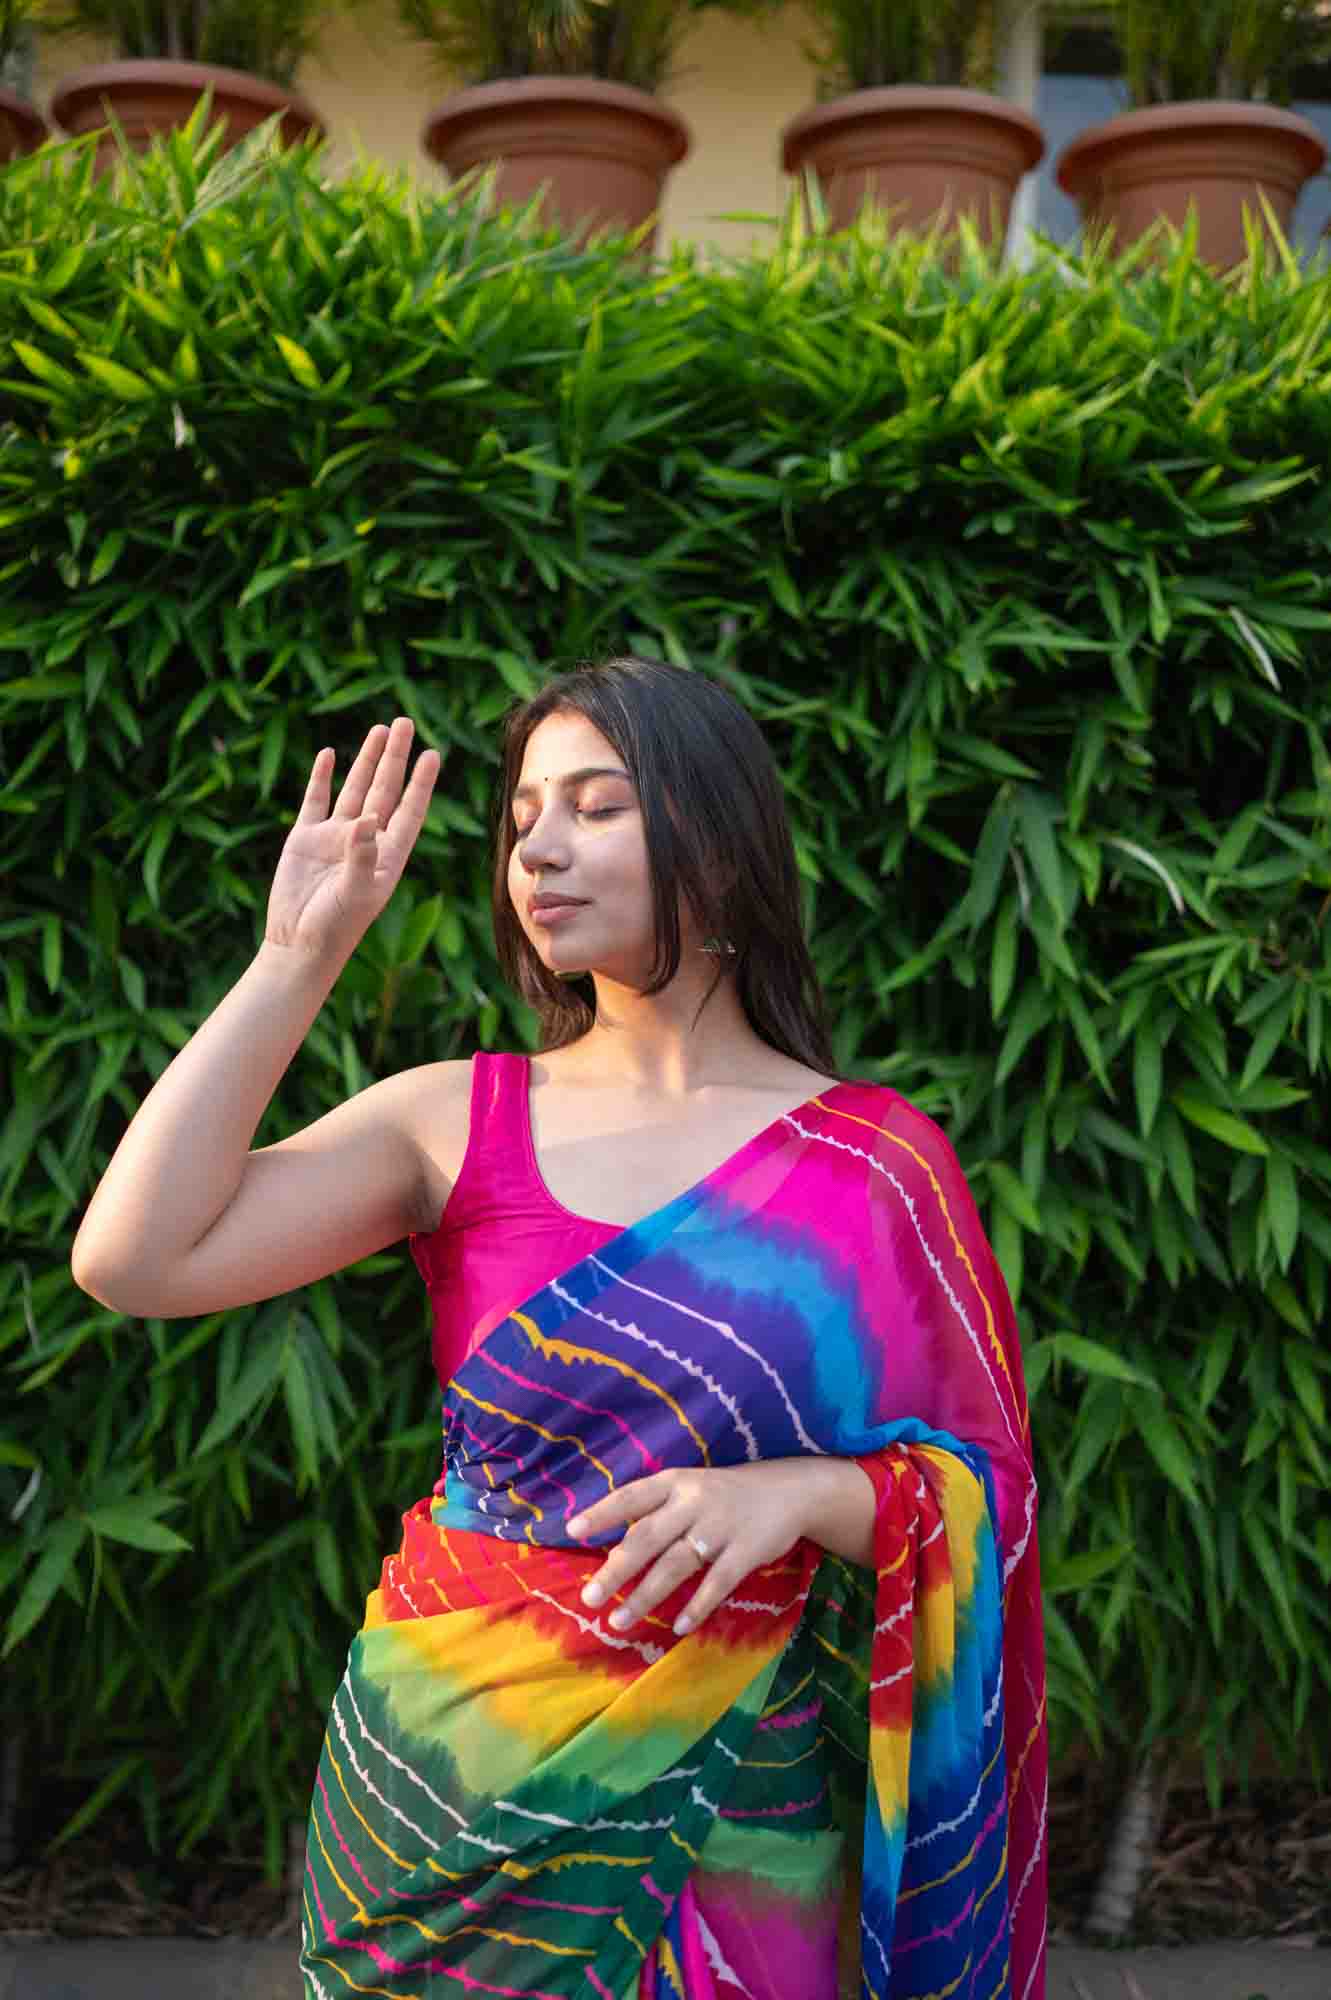 Multicolor Lehriya printed & Soft Chiffon With Tassels on Pallu Wrap in 1 minute saree